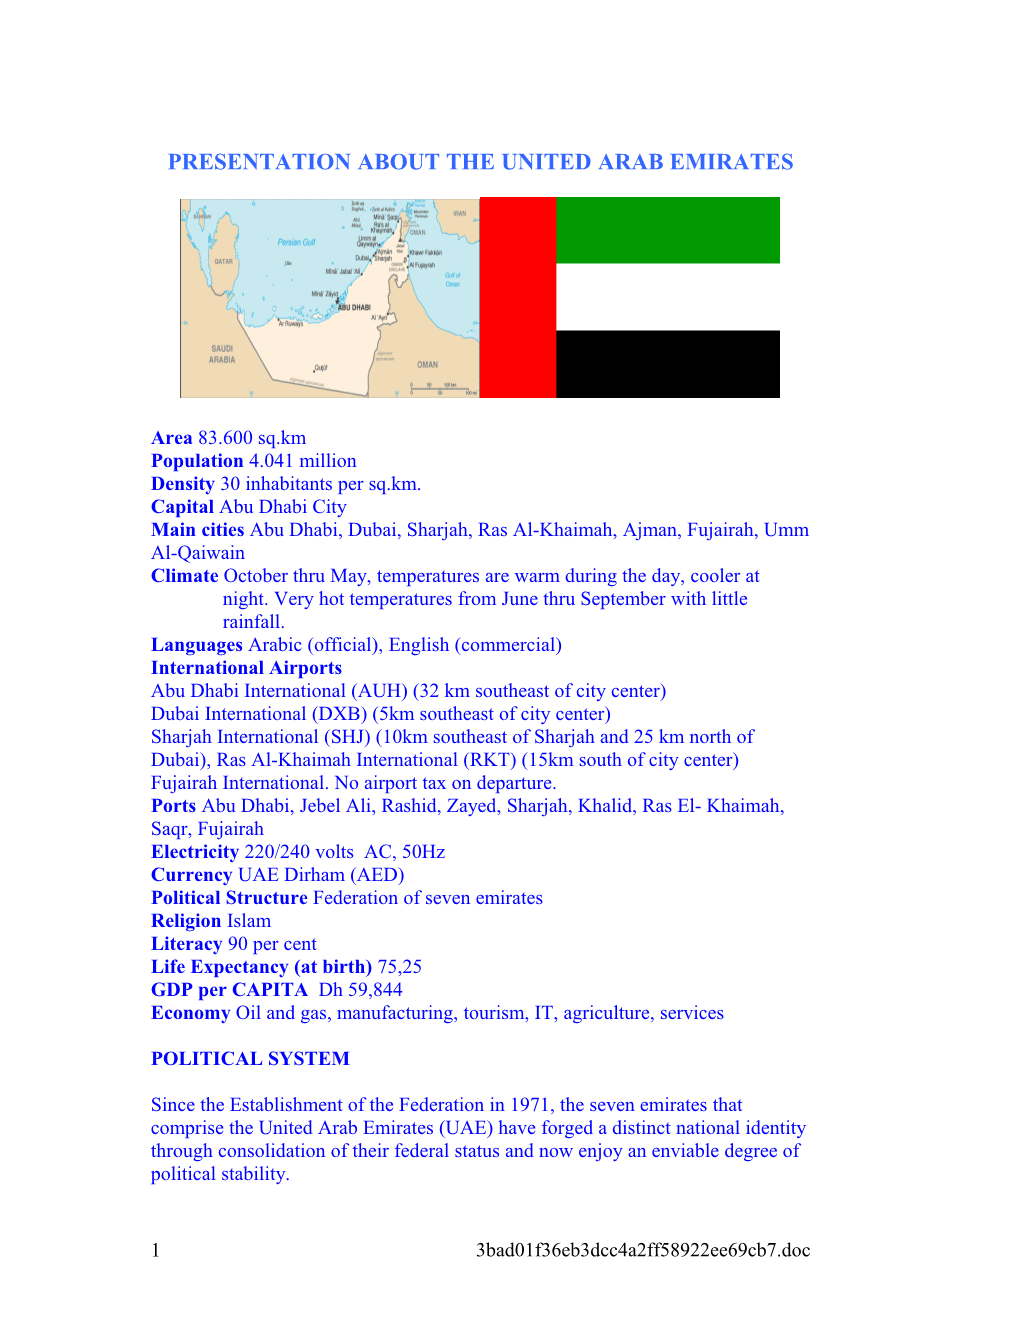 Presentation About the United Arab Emirates